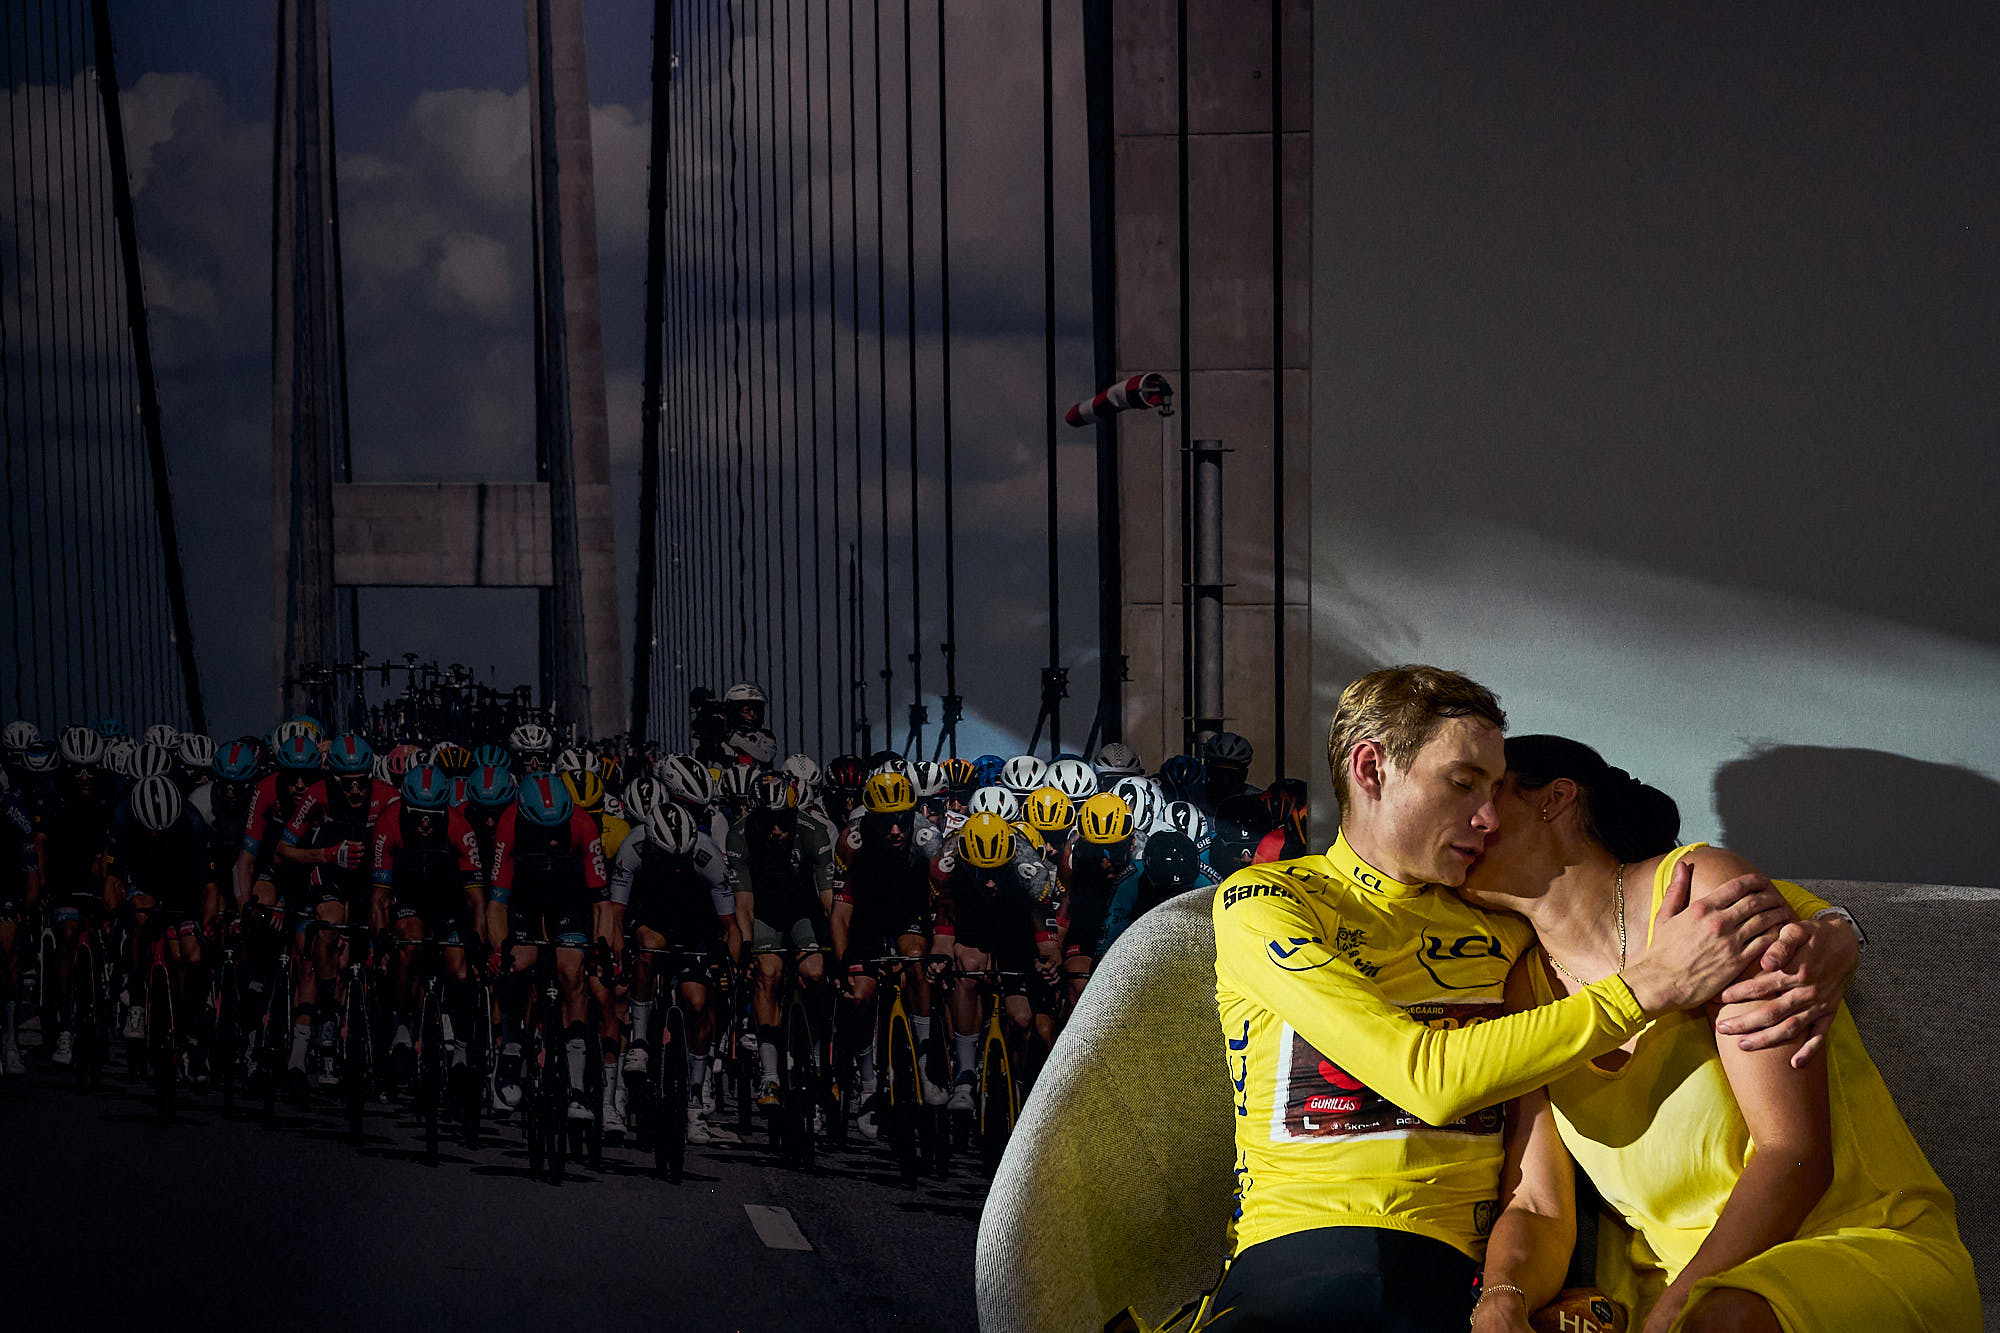 Team JumboVisma // Jonas Vingegaard wins the Tour de France